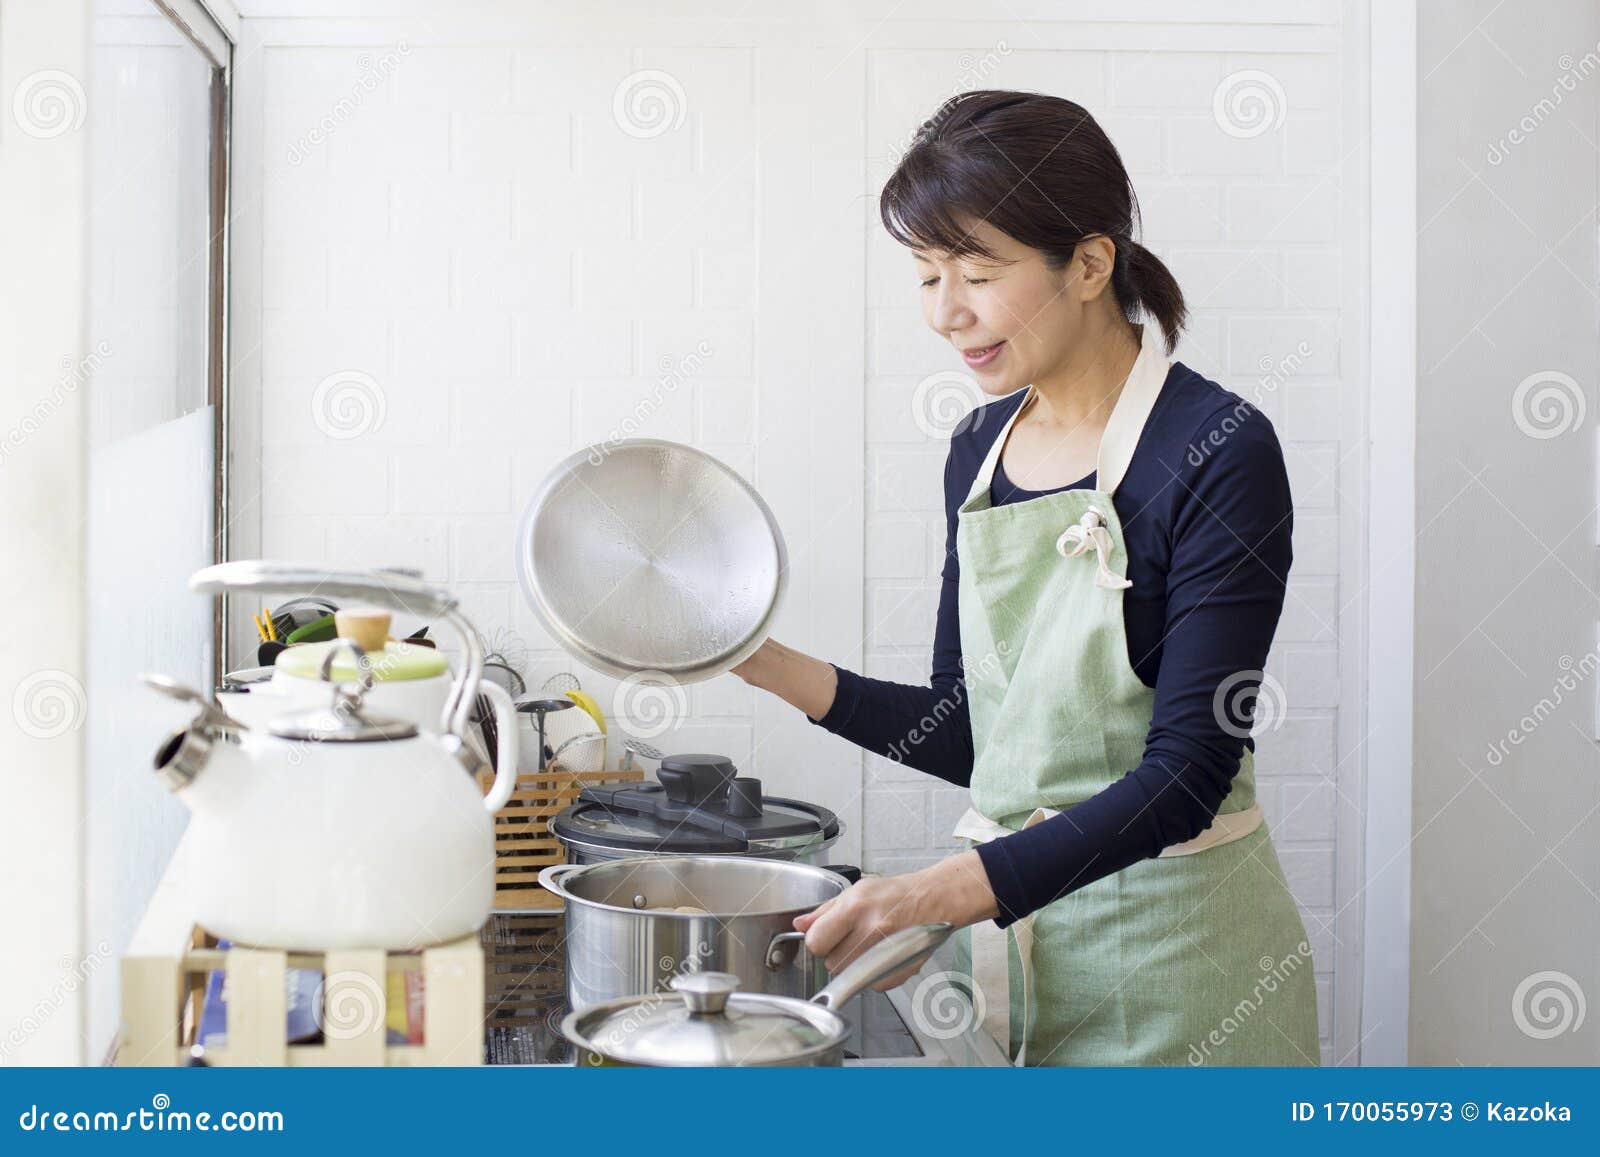 Japanese Women Tasting Dishes Stock Image